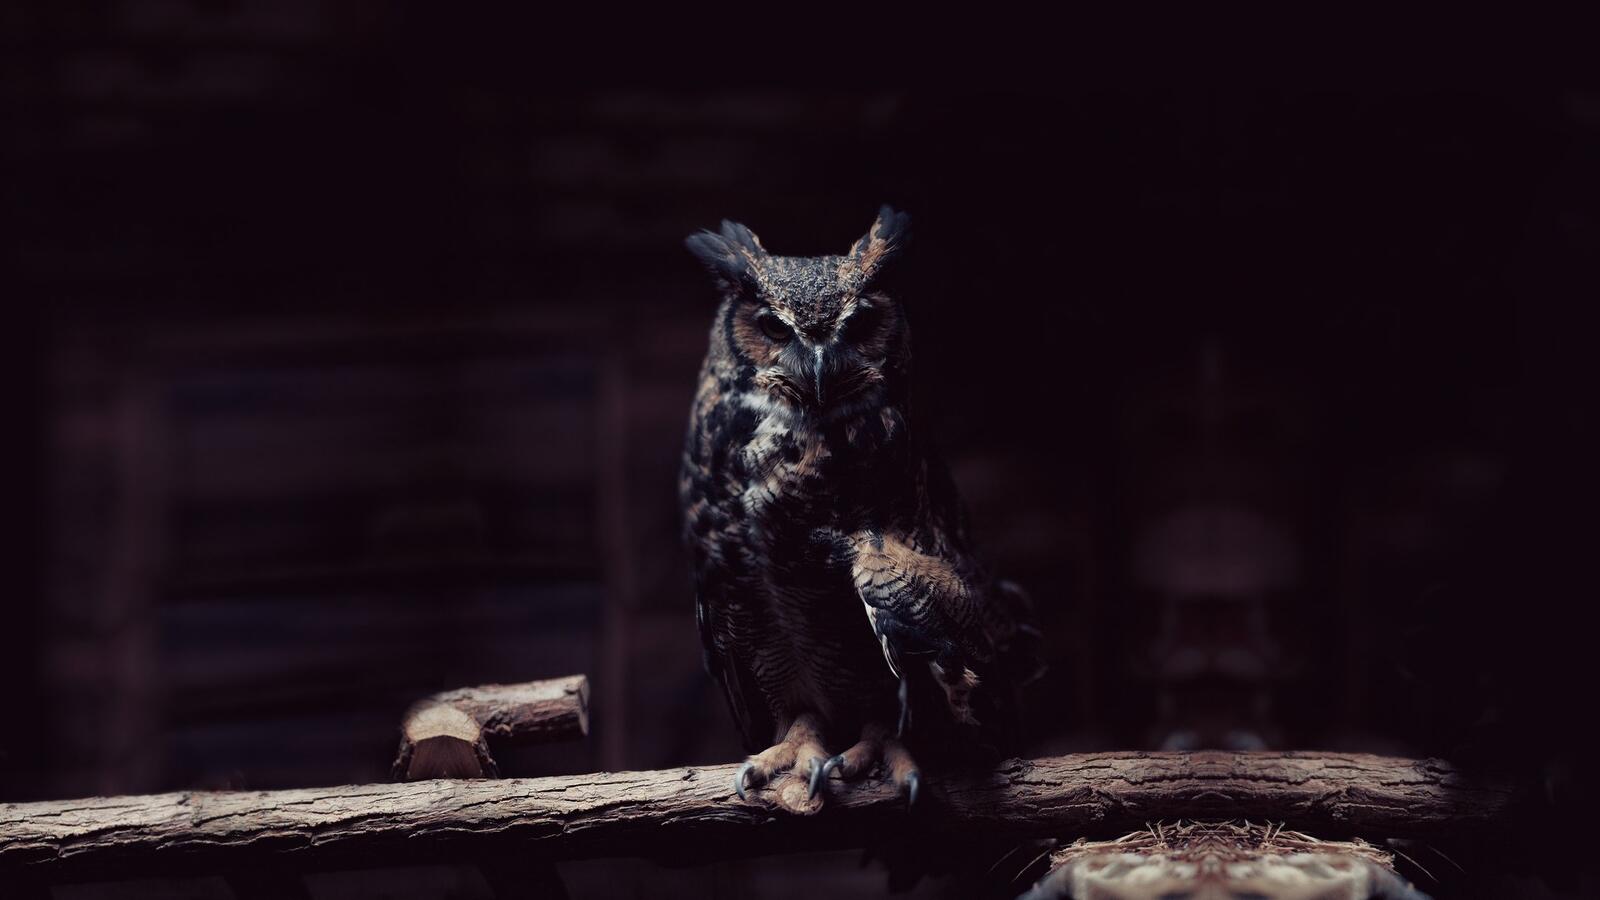 Wallpapers owl majestic predator birds on the desktop